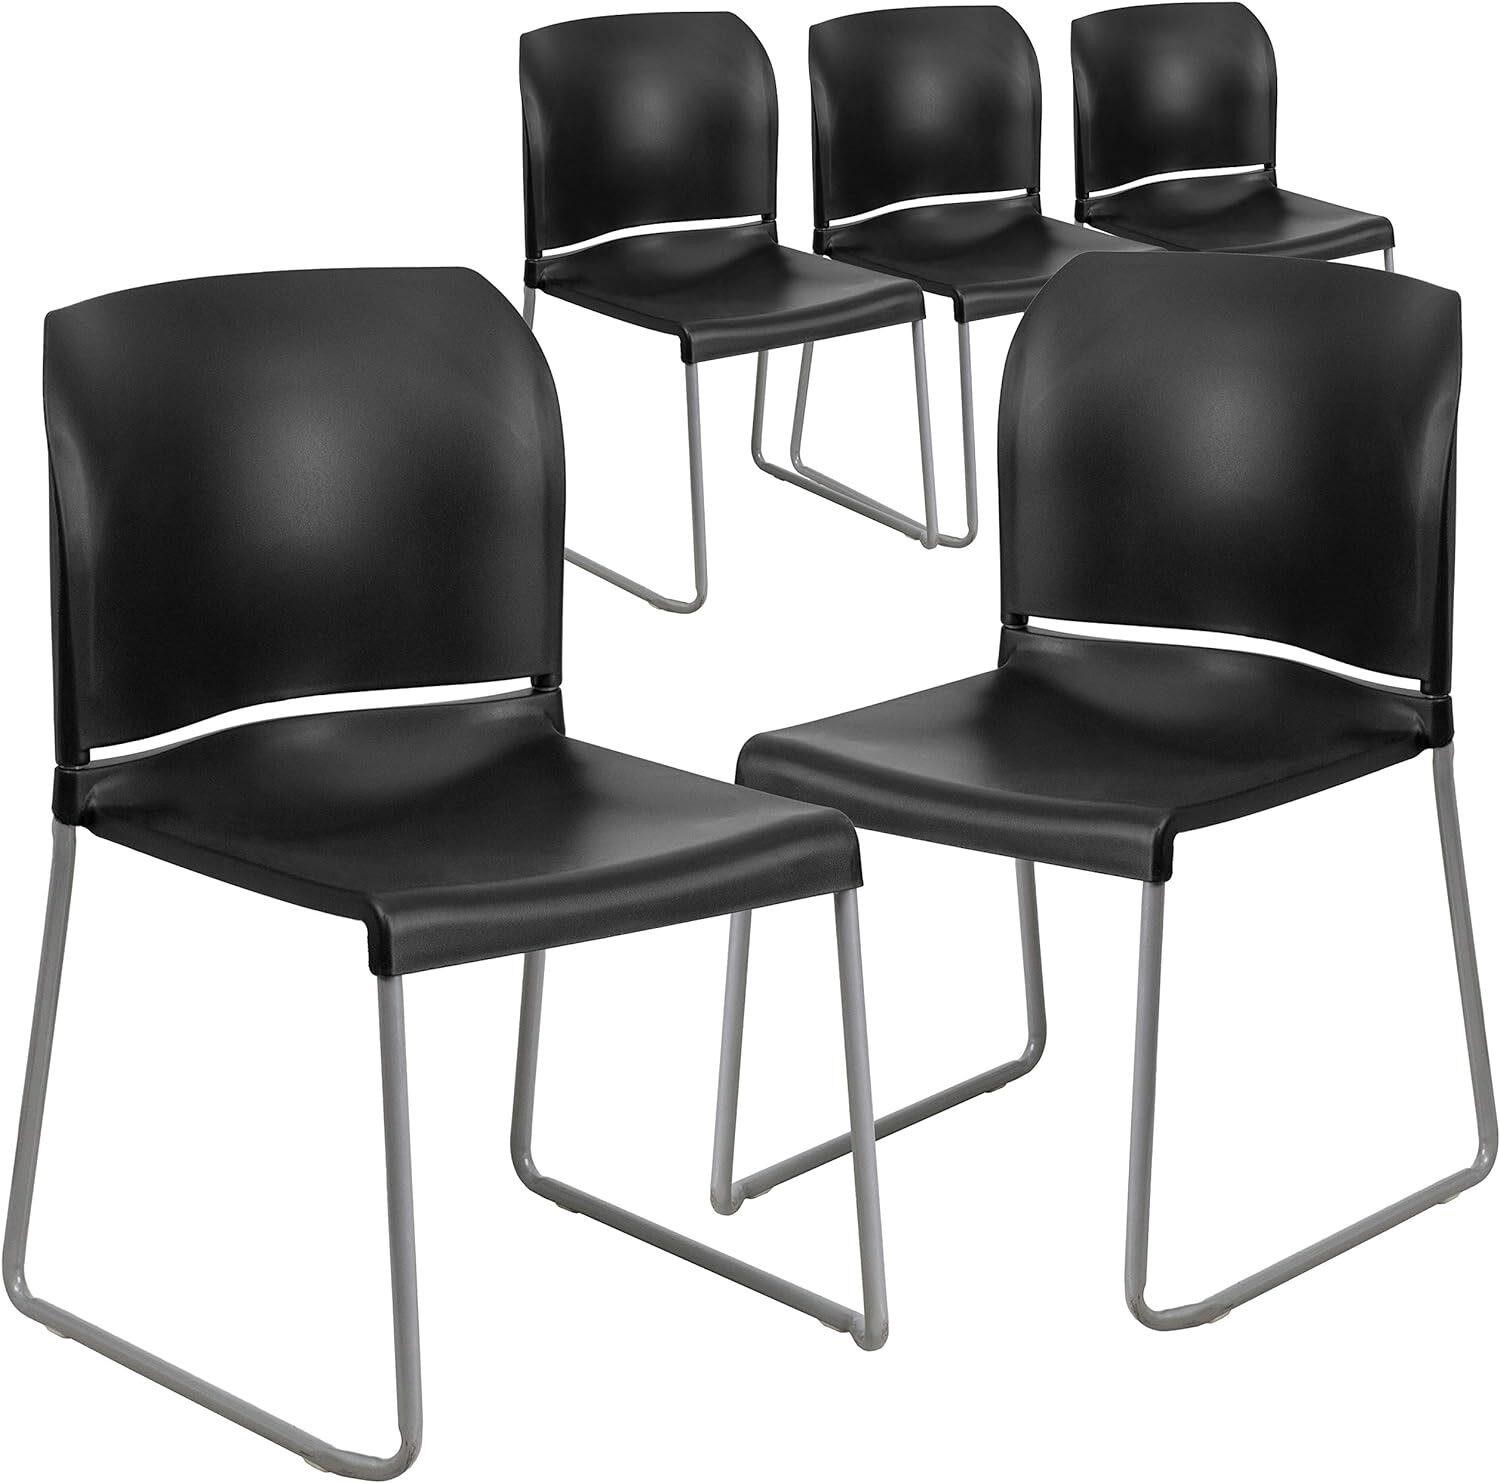 Hercules Contoured Chairs  Black  Set of 5